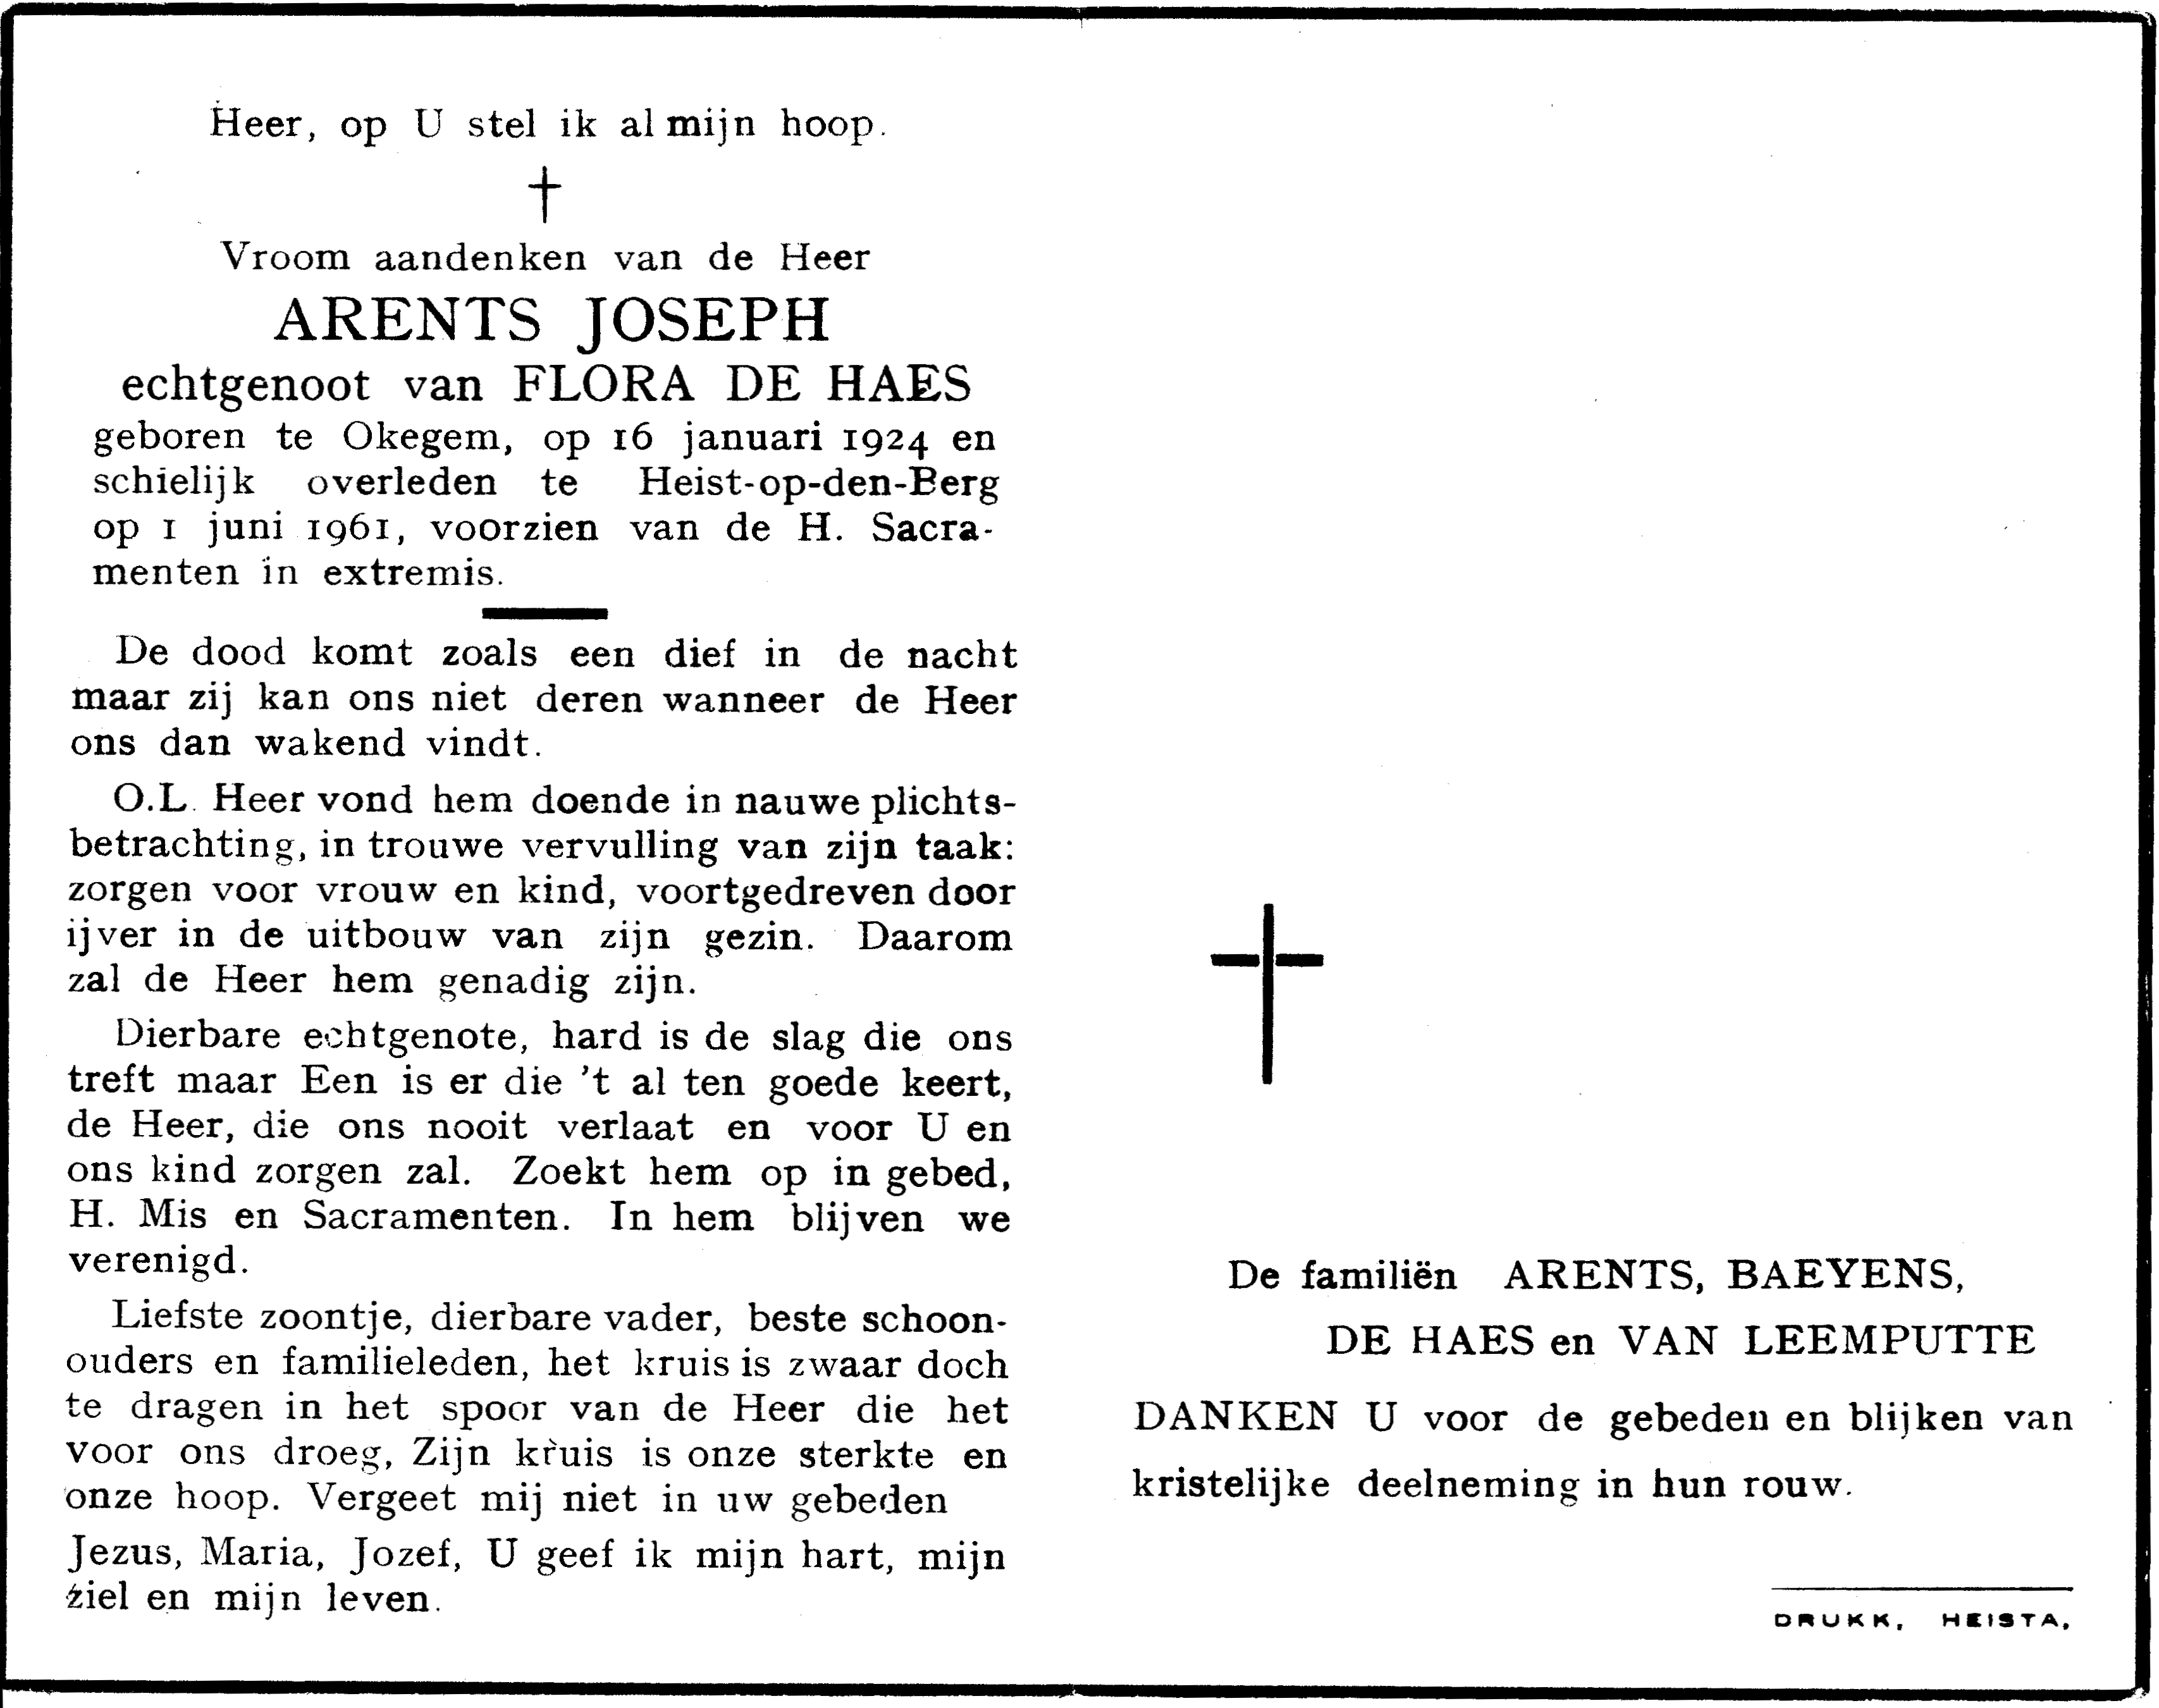 Arents Joseph